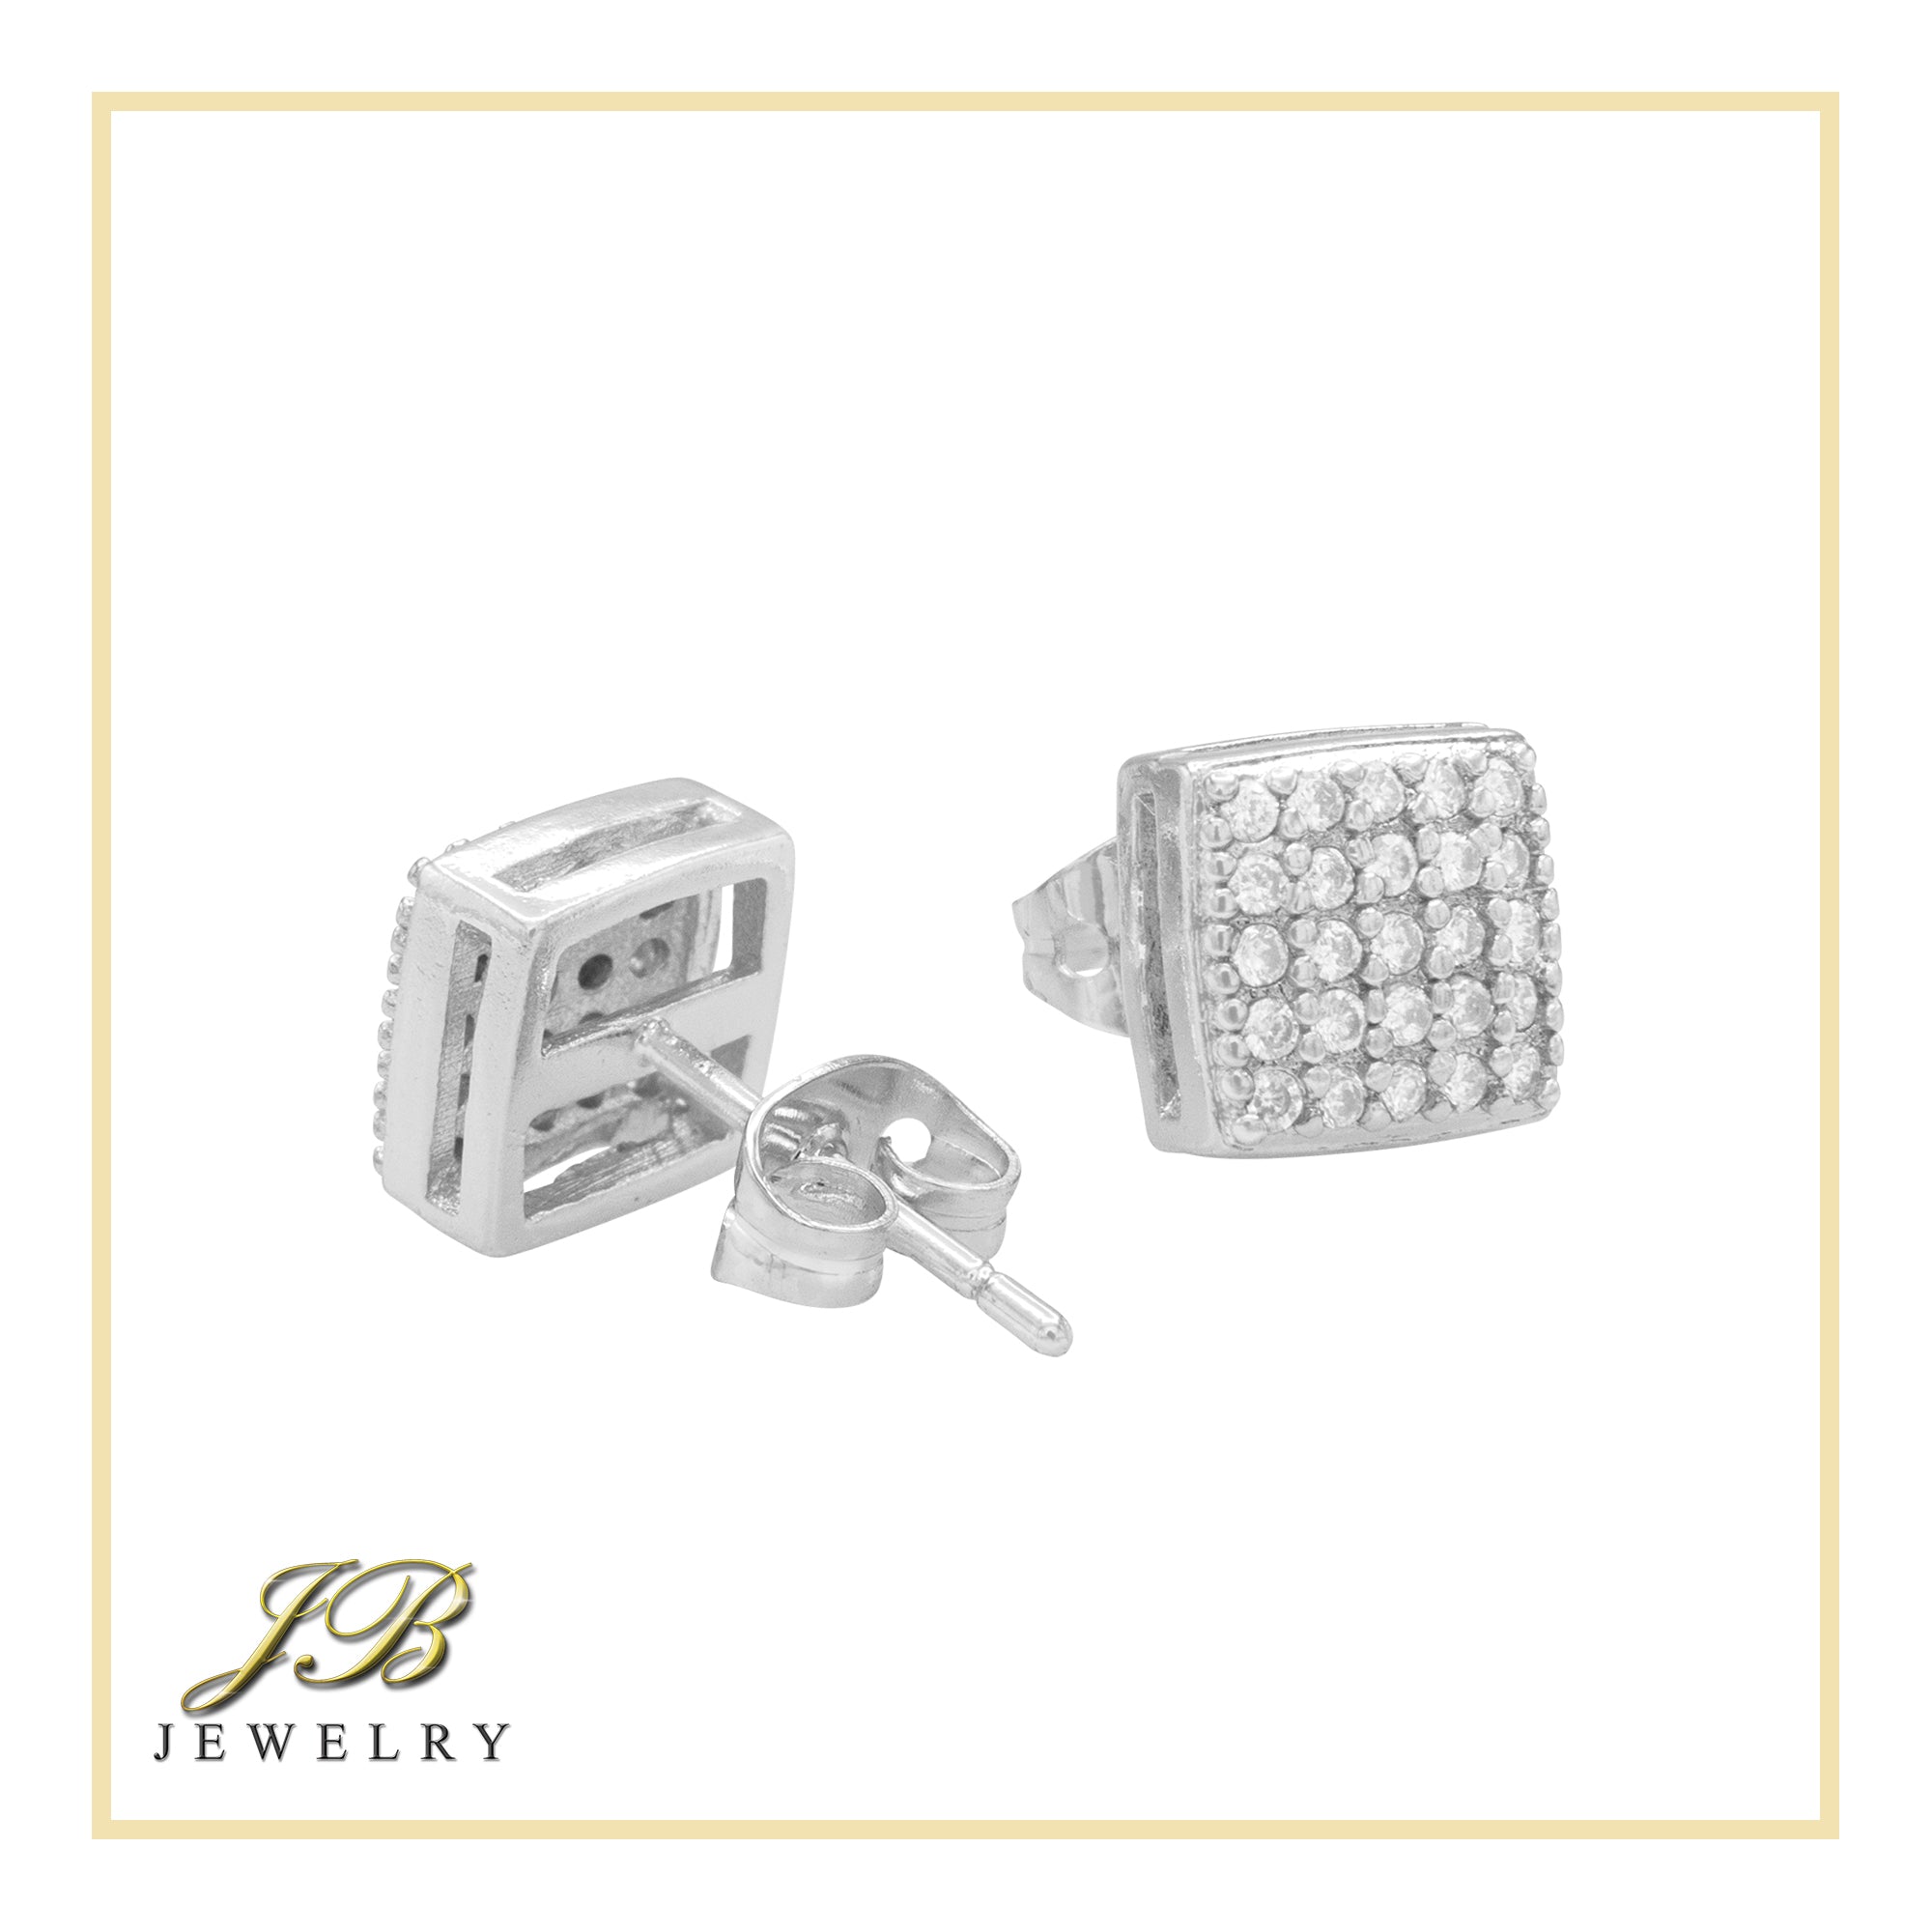 Square 16 Cubic Zirconia Earrings 14K Gold Filled Silver Hip Hop Studs Jewelry Women Men